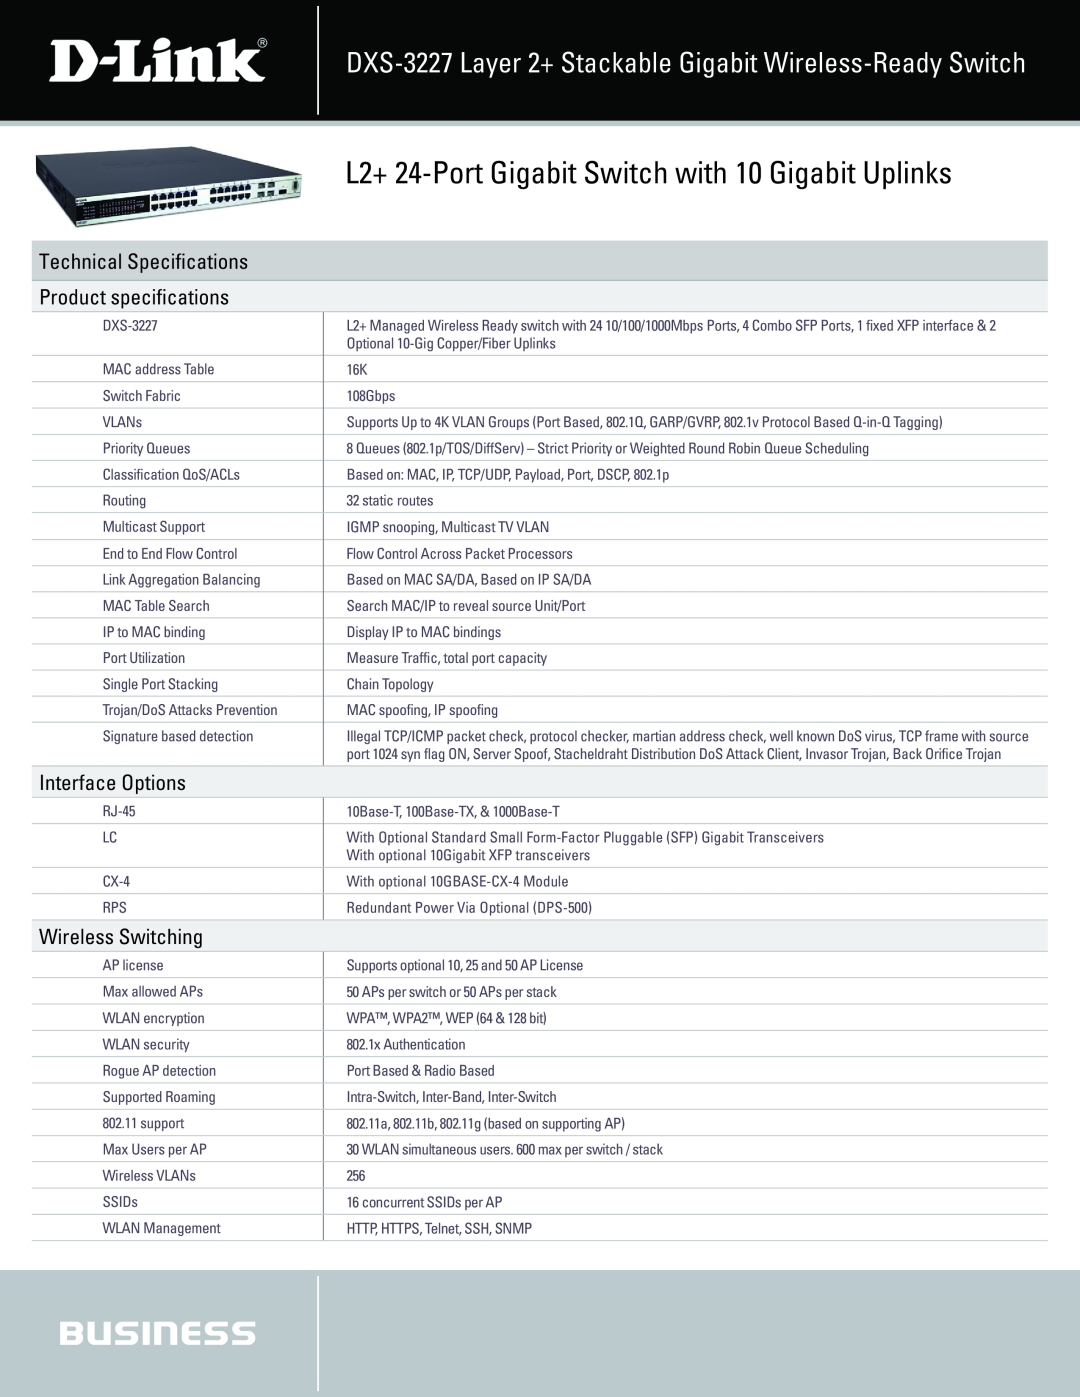 D-Link DXS-3227 manual L2+ 24-Port Gigabit Switch with 10 Gigabit Uplinks, Interface Options, Wireless Switching 